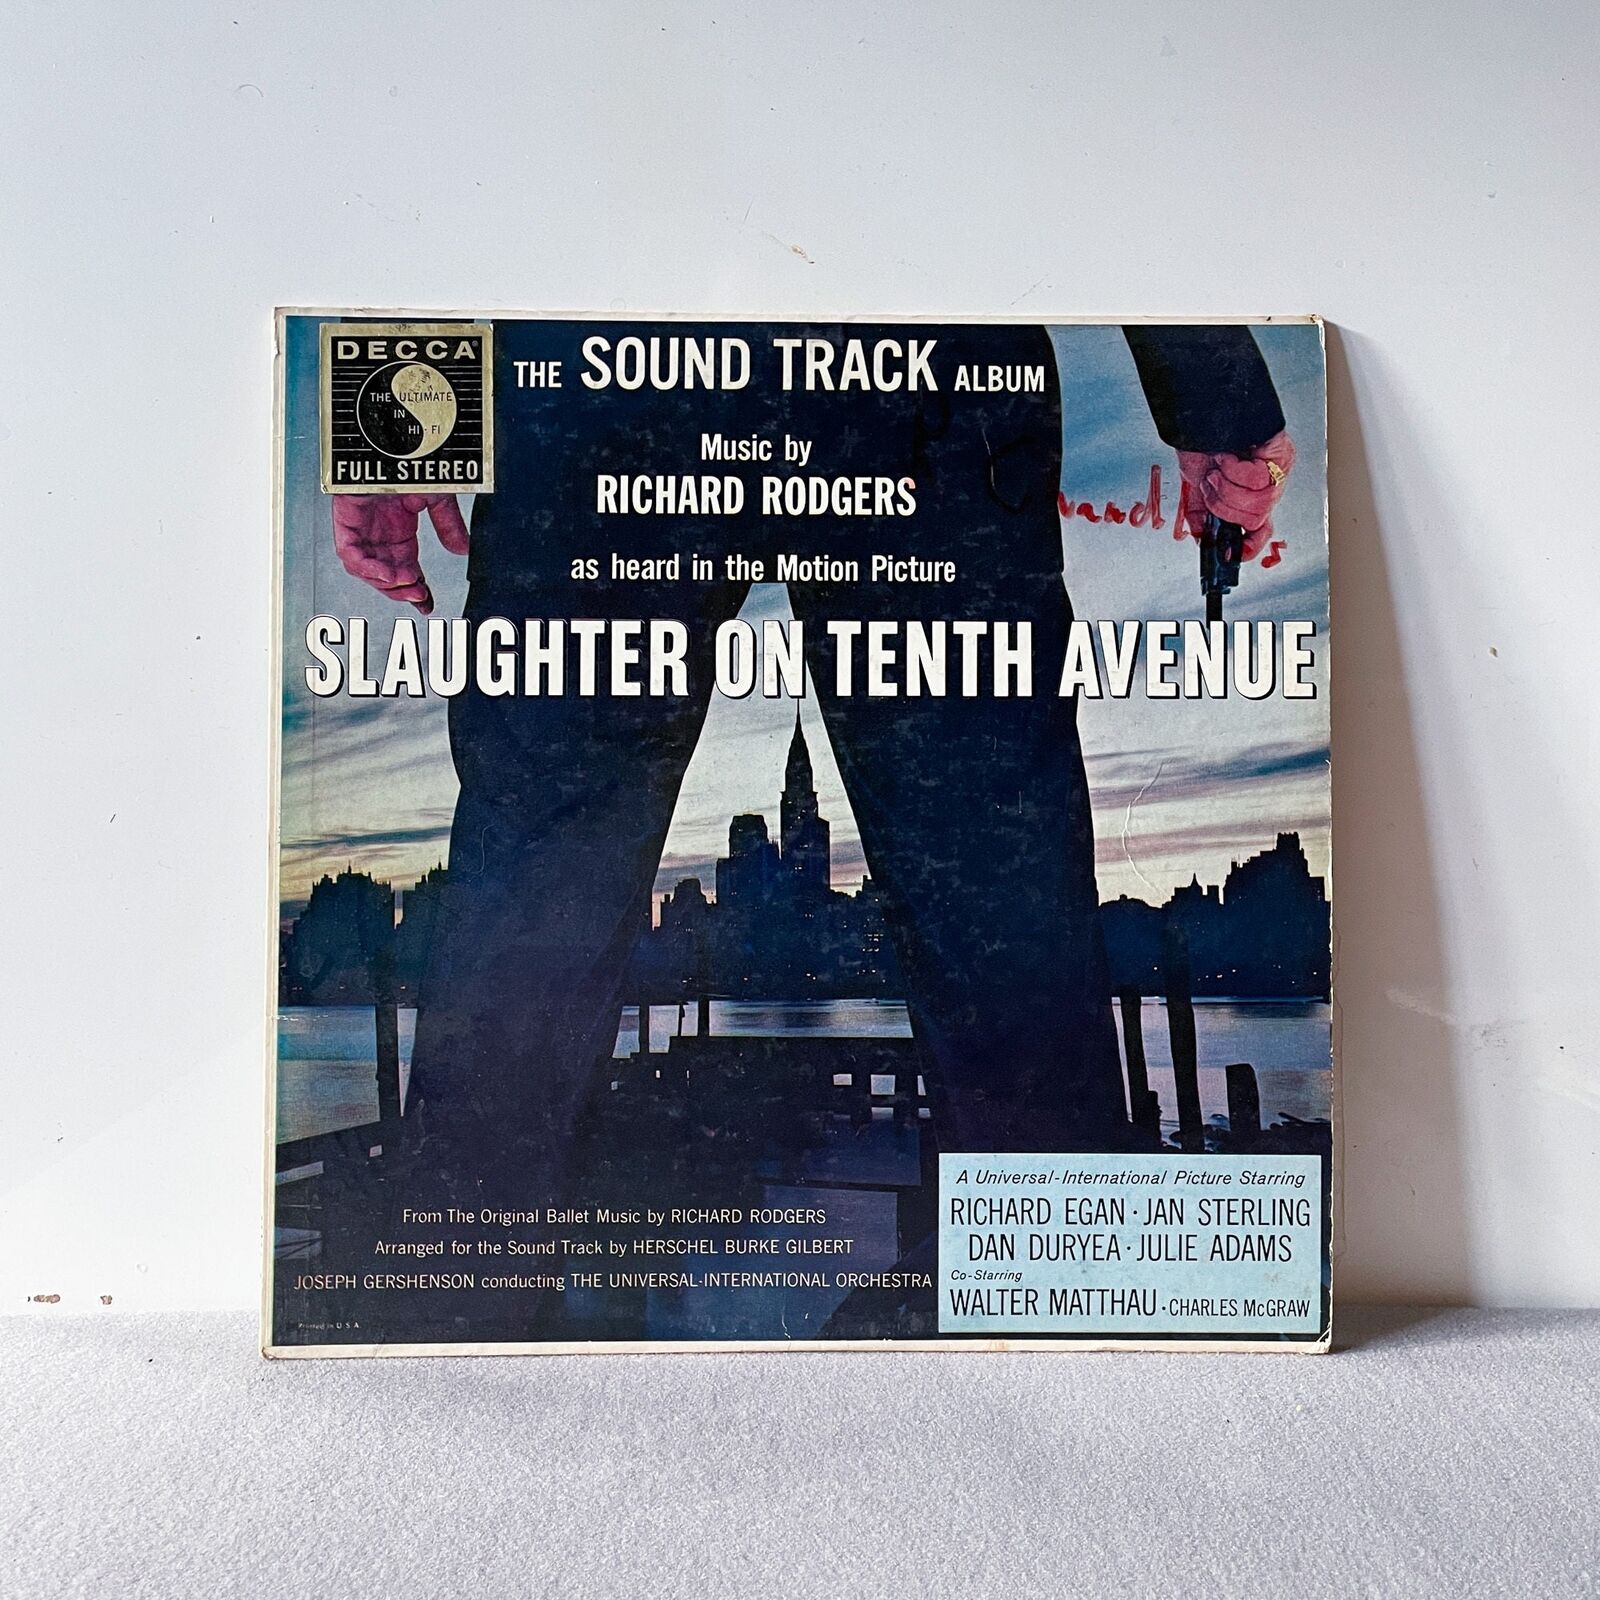 Richard Rodgers - Slaughter On Tenth Avenue - The Sound Track Album - Vinyl LP 